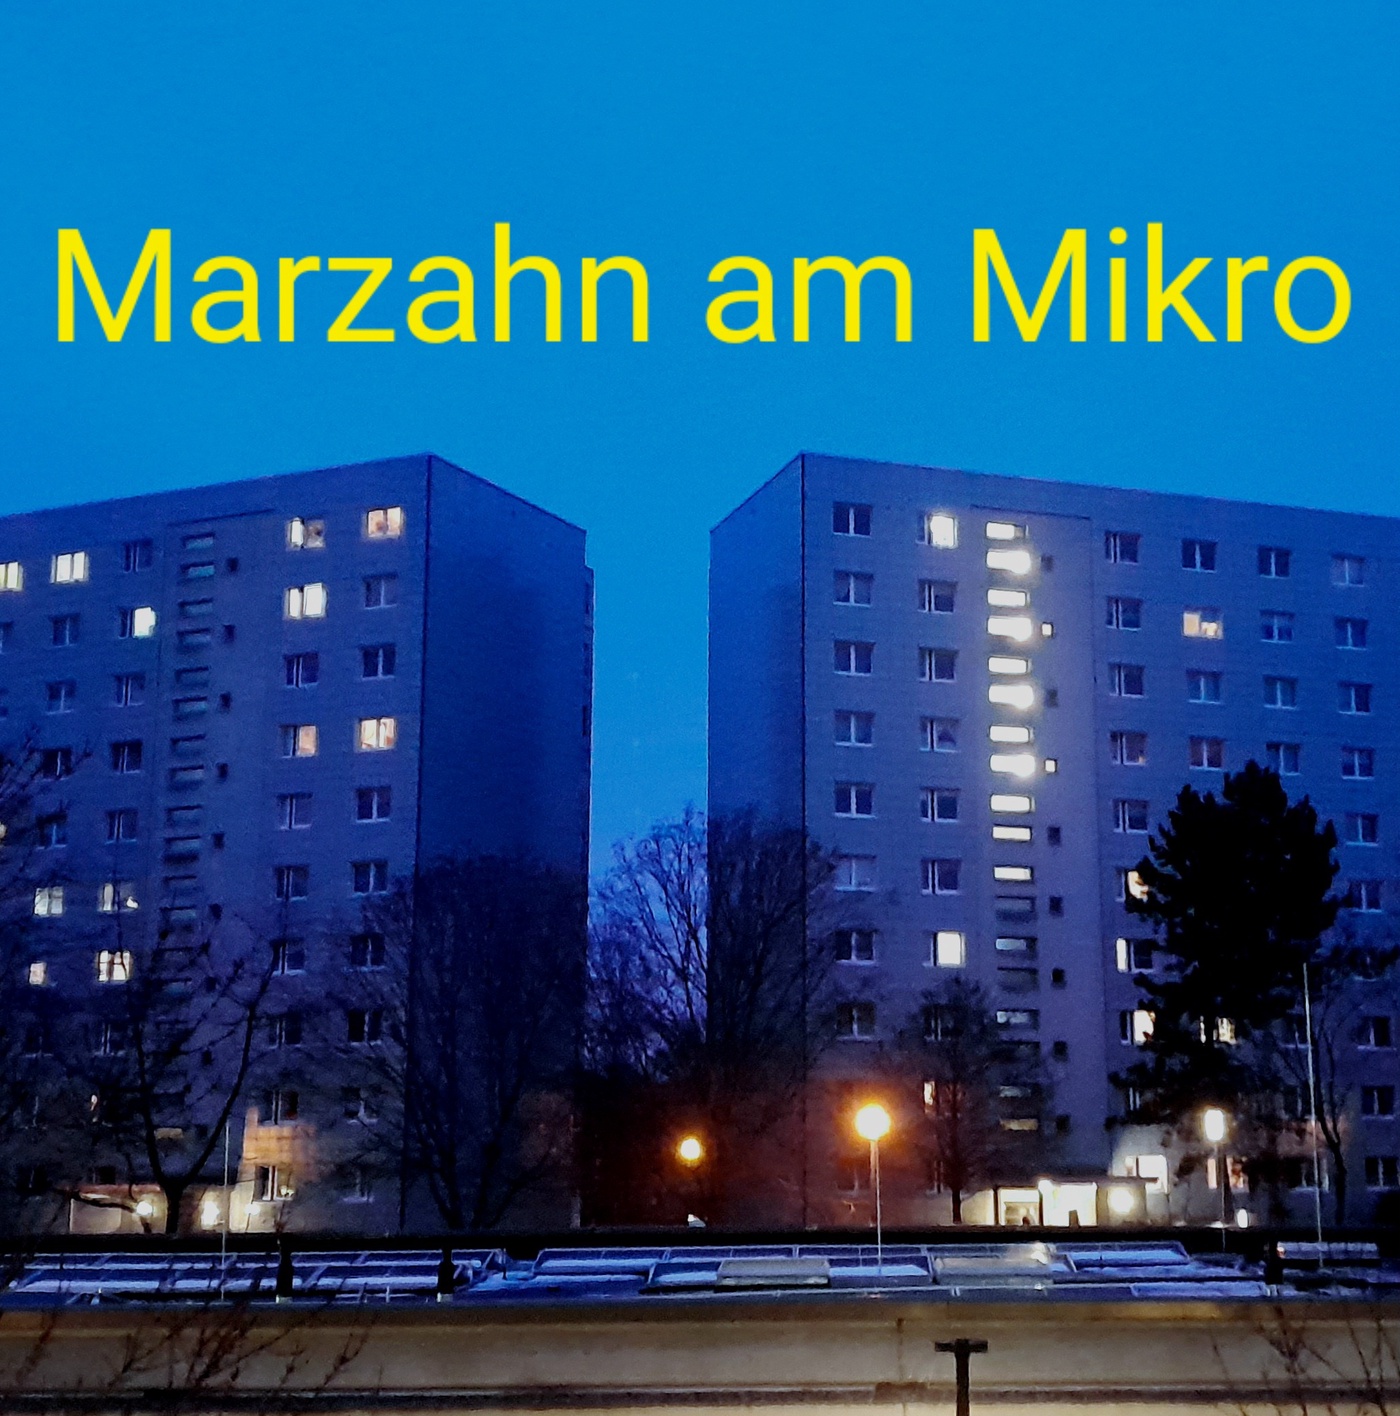 Marzahn am Mikro